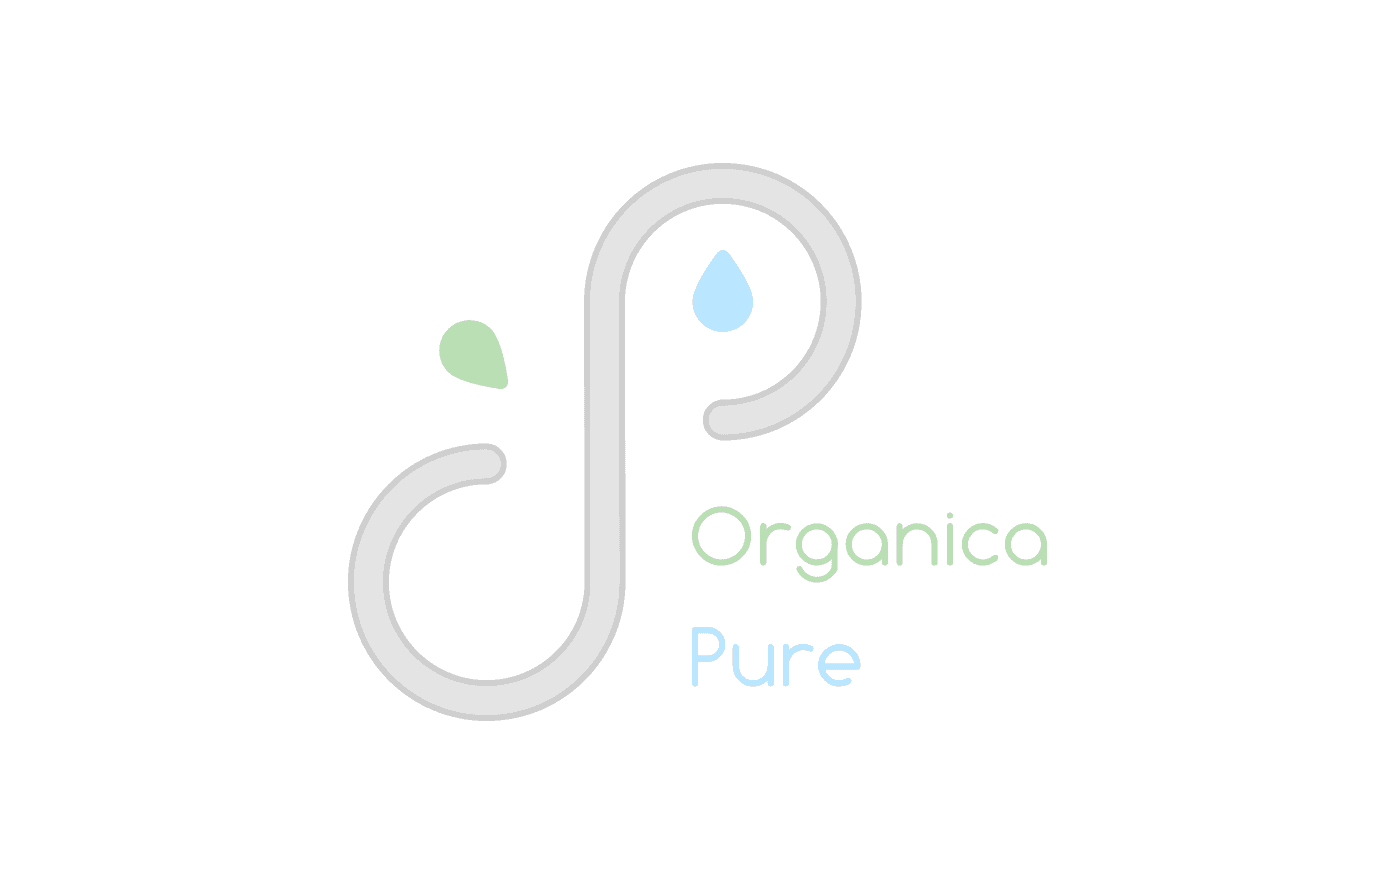 Organica Pure - Branding